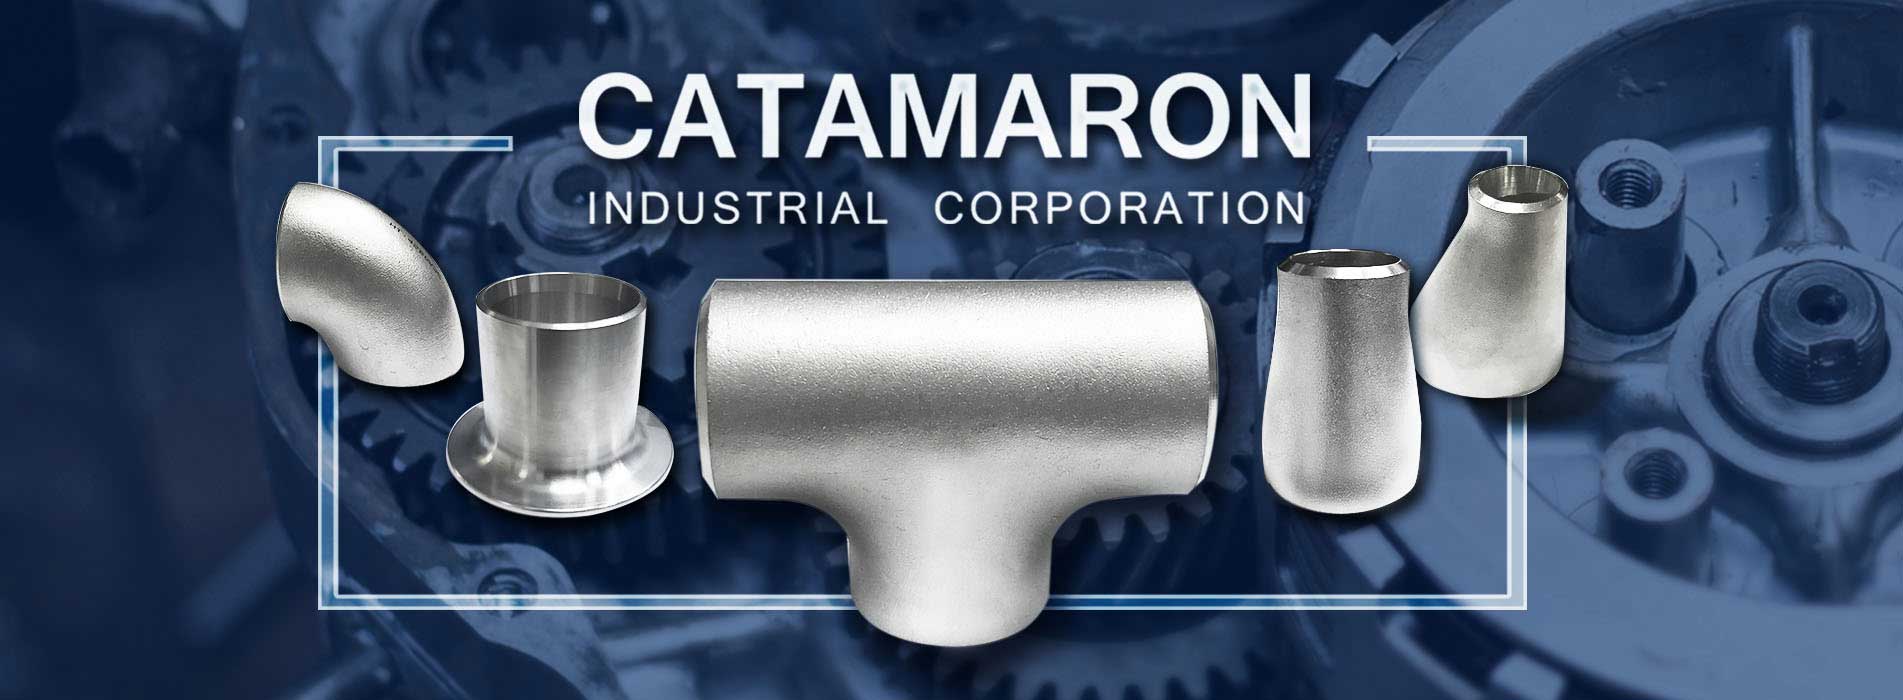 Catamaron Industrial Corporation...